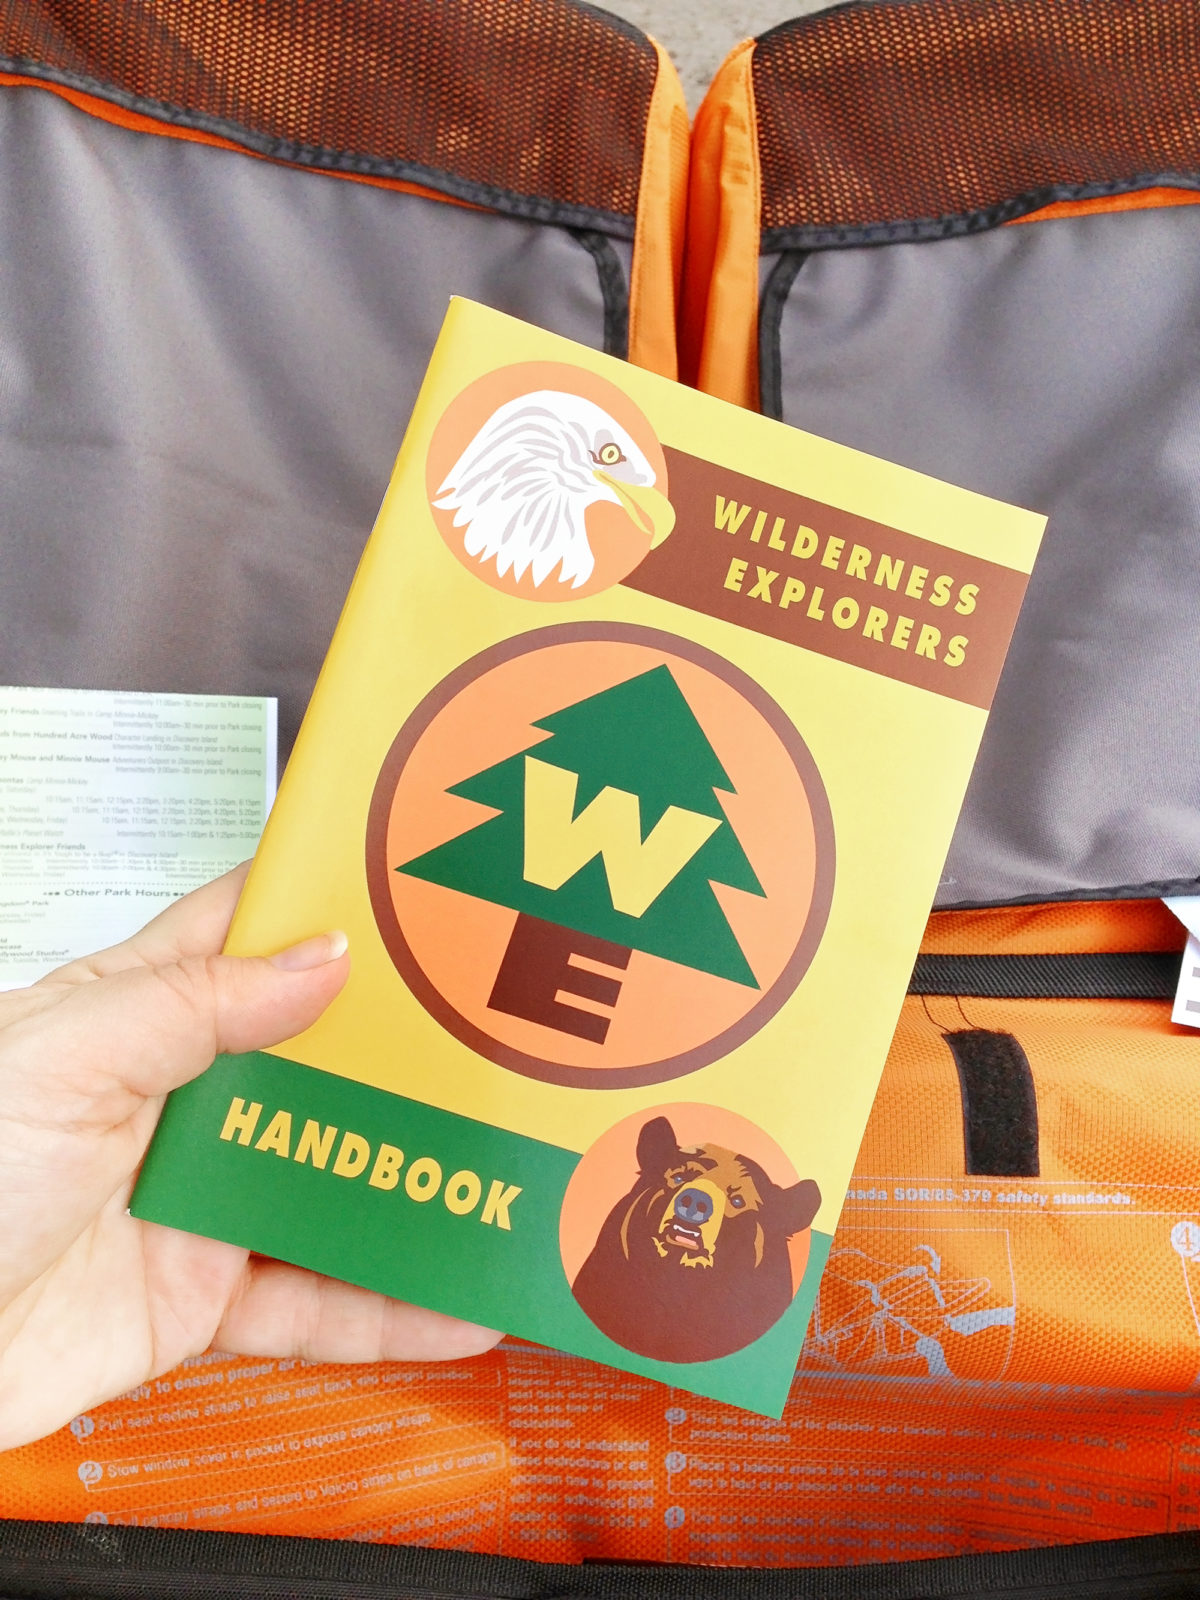 Wilderness Explorers Club Handbook at Disney's Animal Kingdom